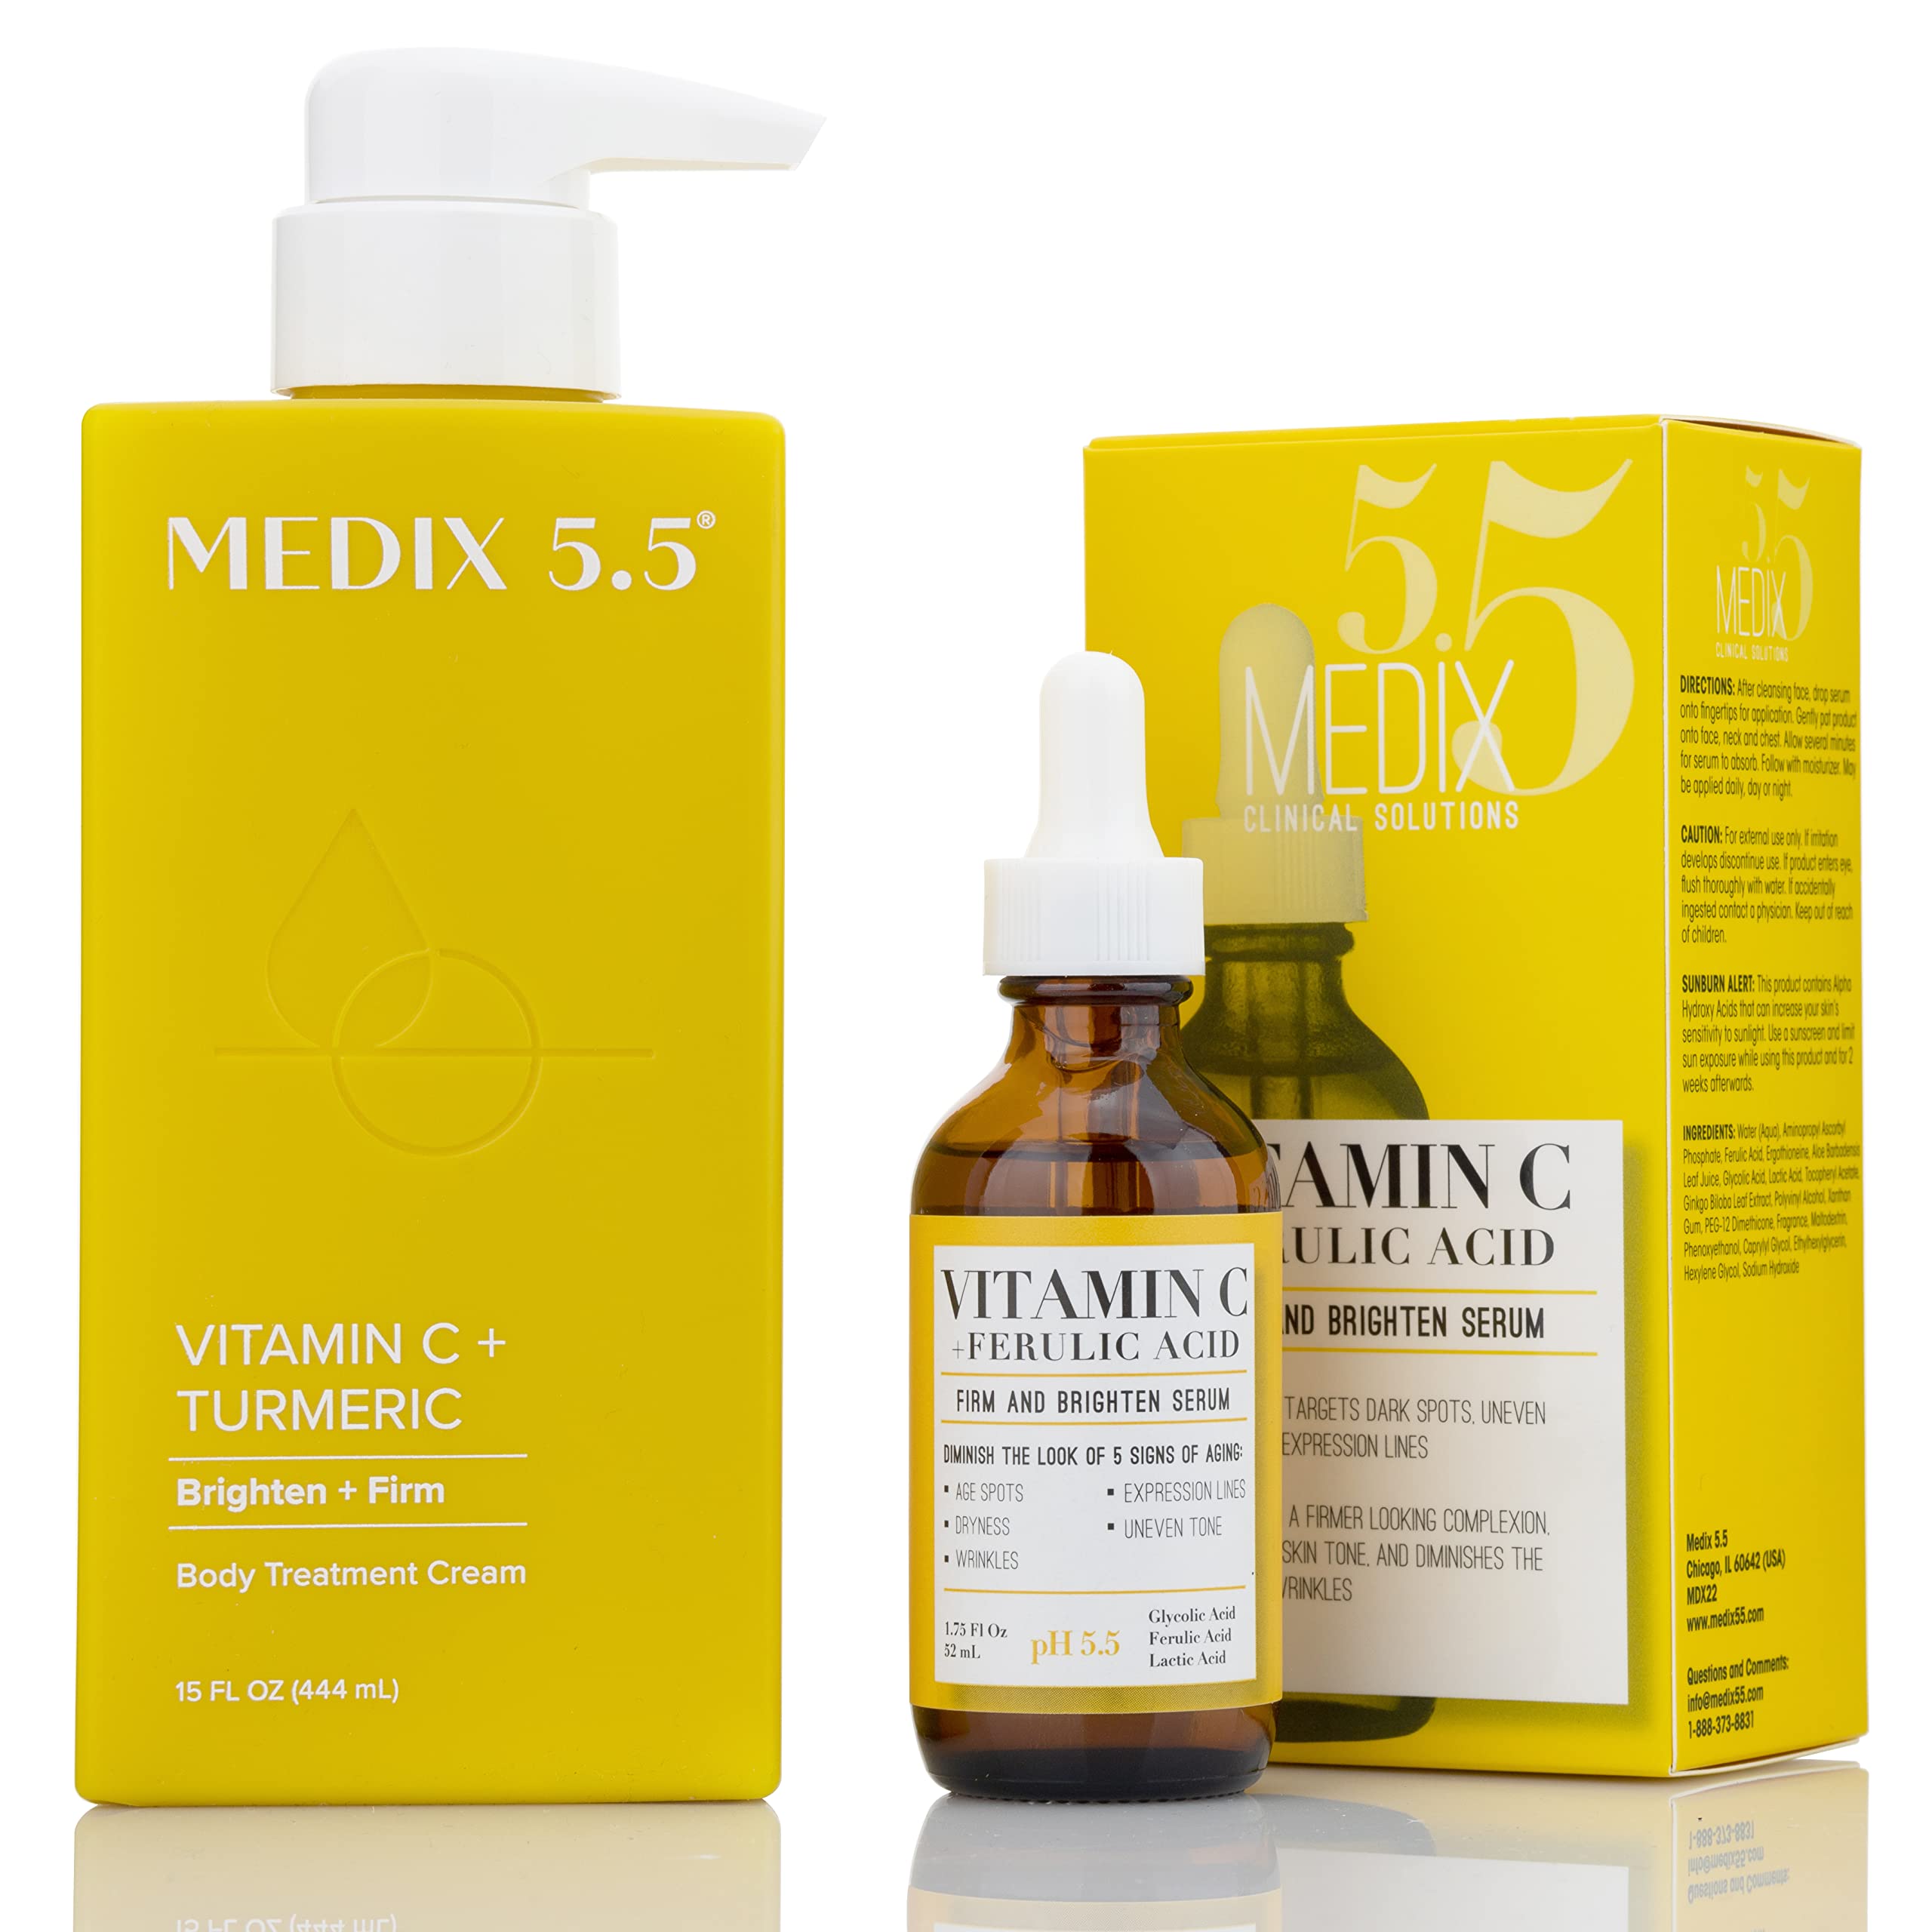 Medix 5.5 Medix Vitamin C Skin Care Set For Face & Body, Anti Aging Potent Vitamin C Facial Serum + Vitamin C Cream Moisturizer Body Lotio